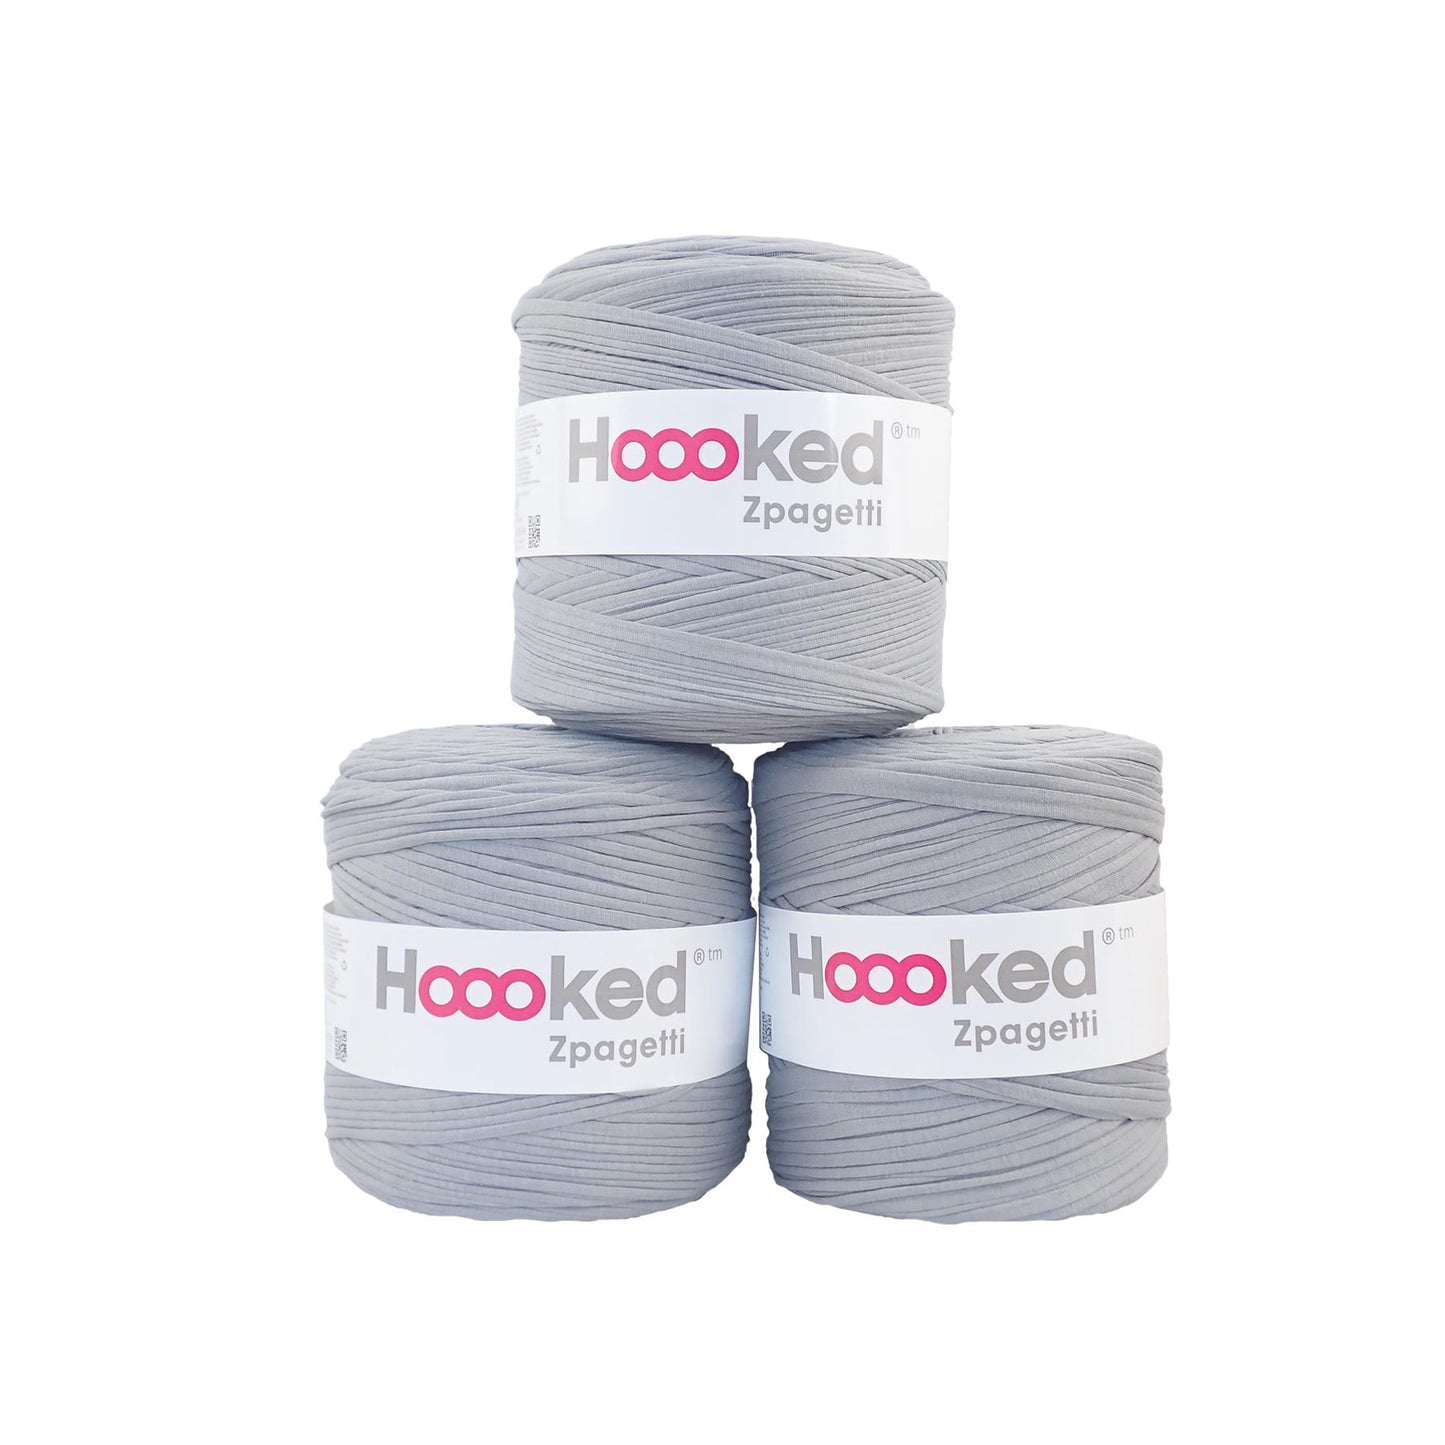 Hoooked Zpagetti Dark Grey Cotton T-Shirt Yarn - 120M 700g (Pack of 3)